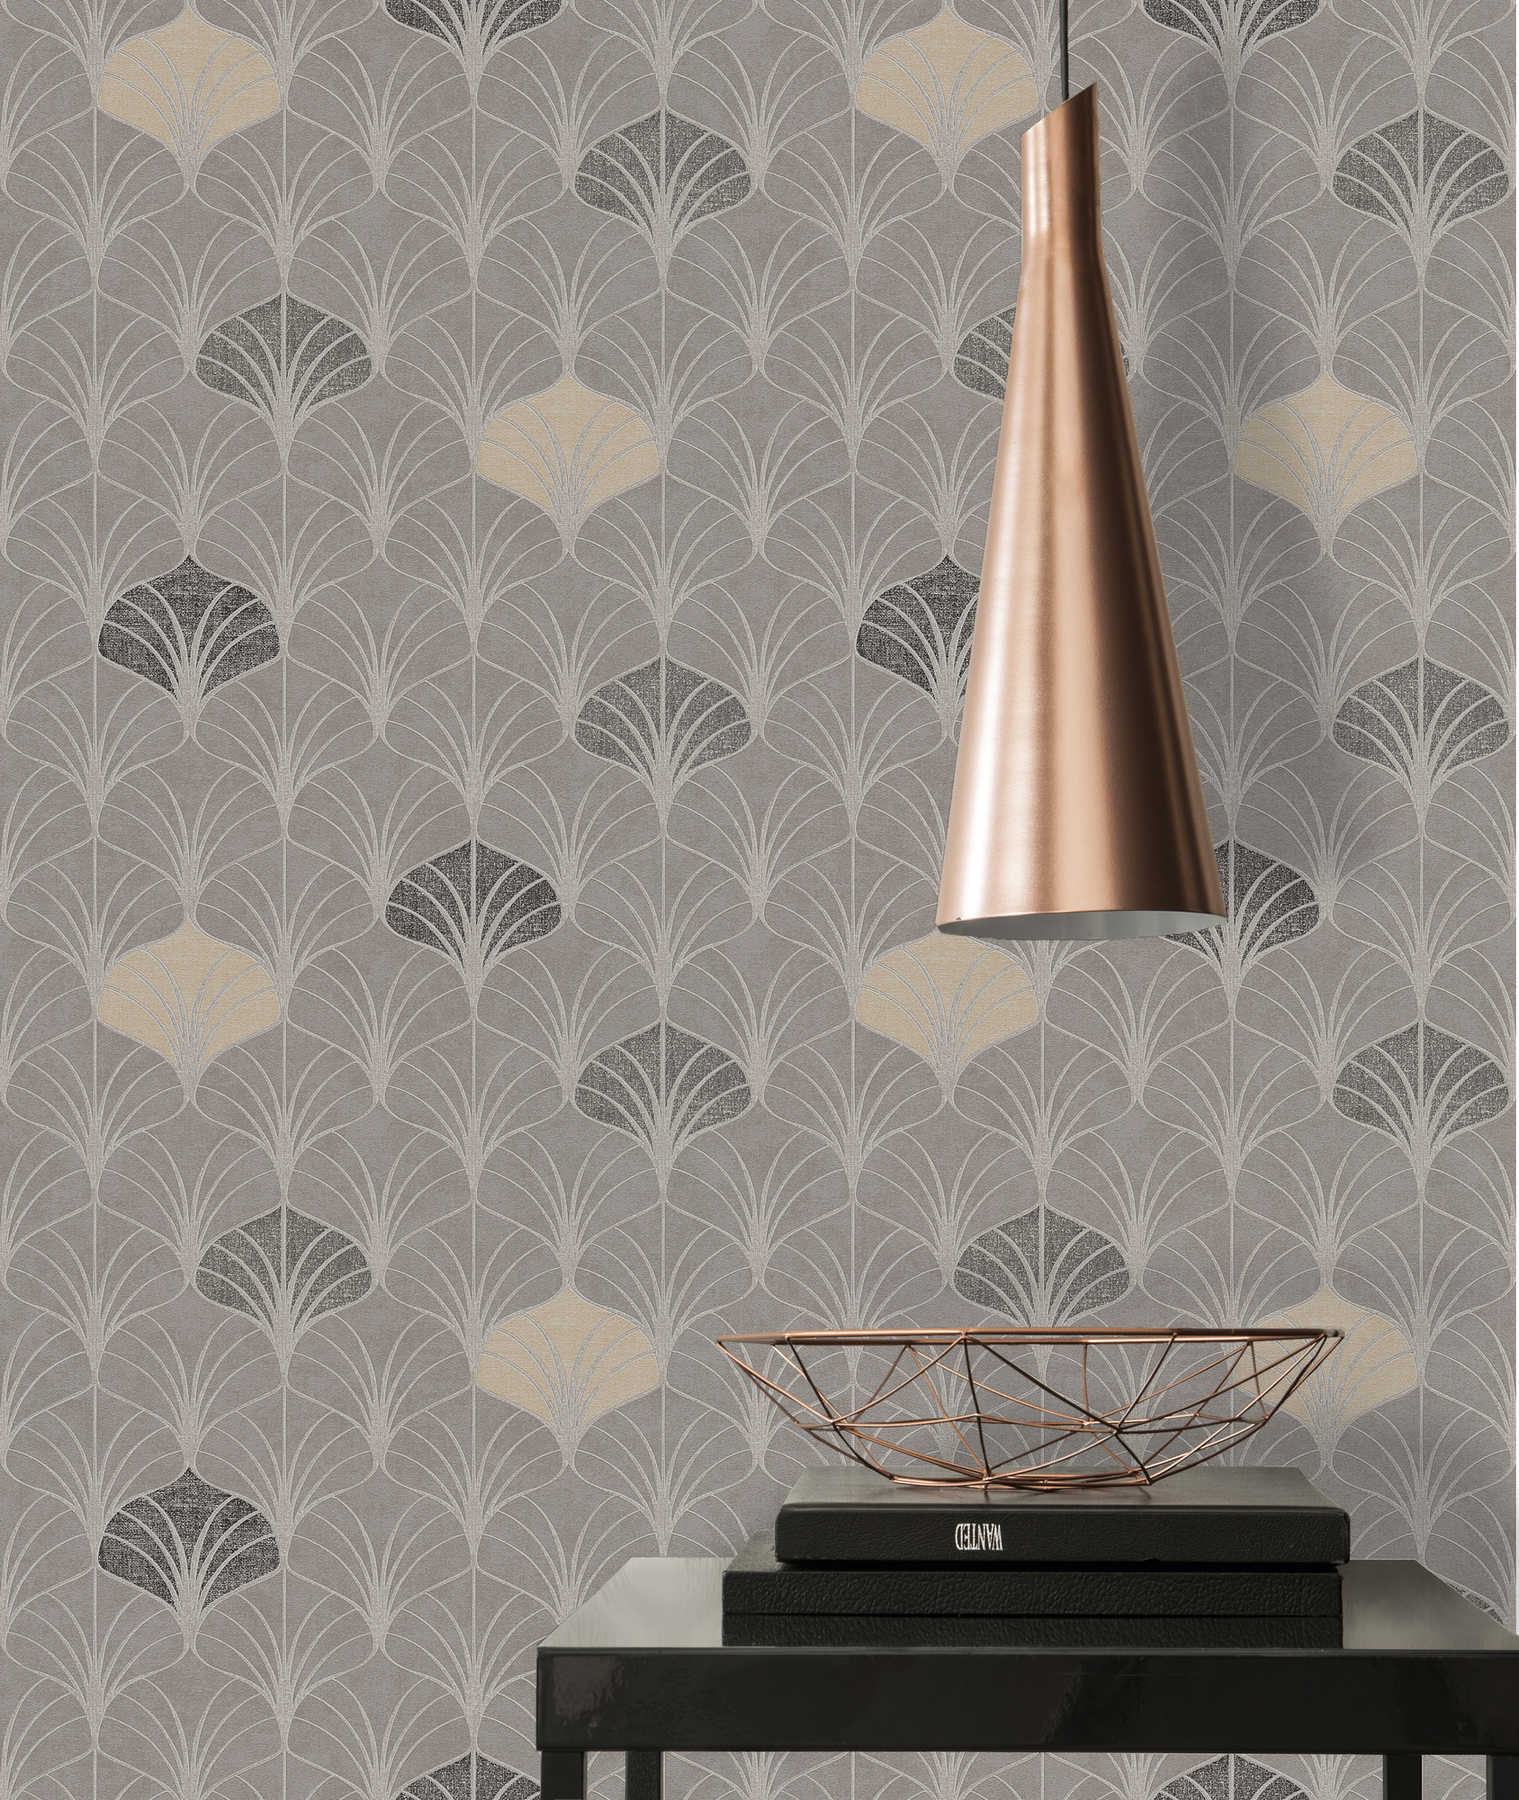             Mustertapete Art-Deco-Stil mit Metallic Effekt – Grau, Beige, Braun
        